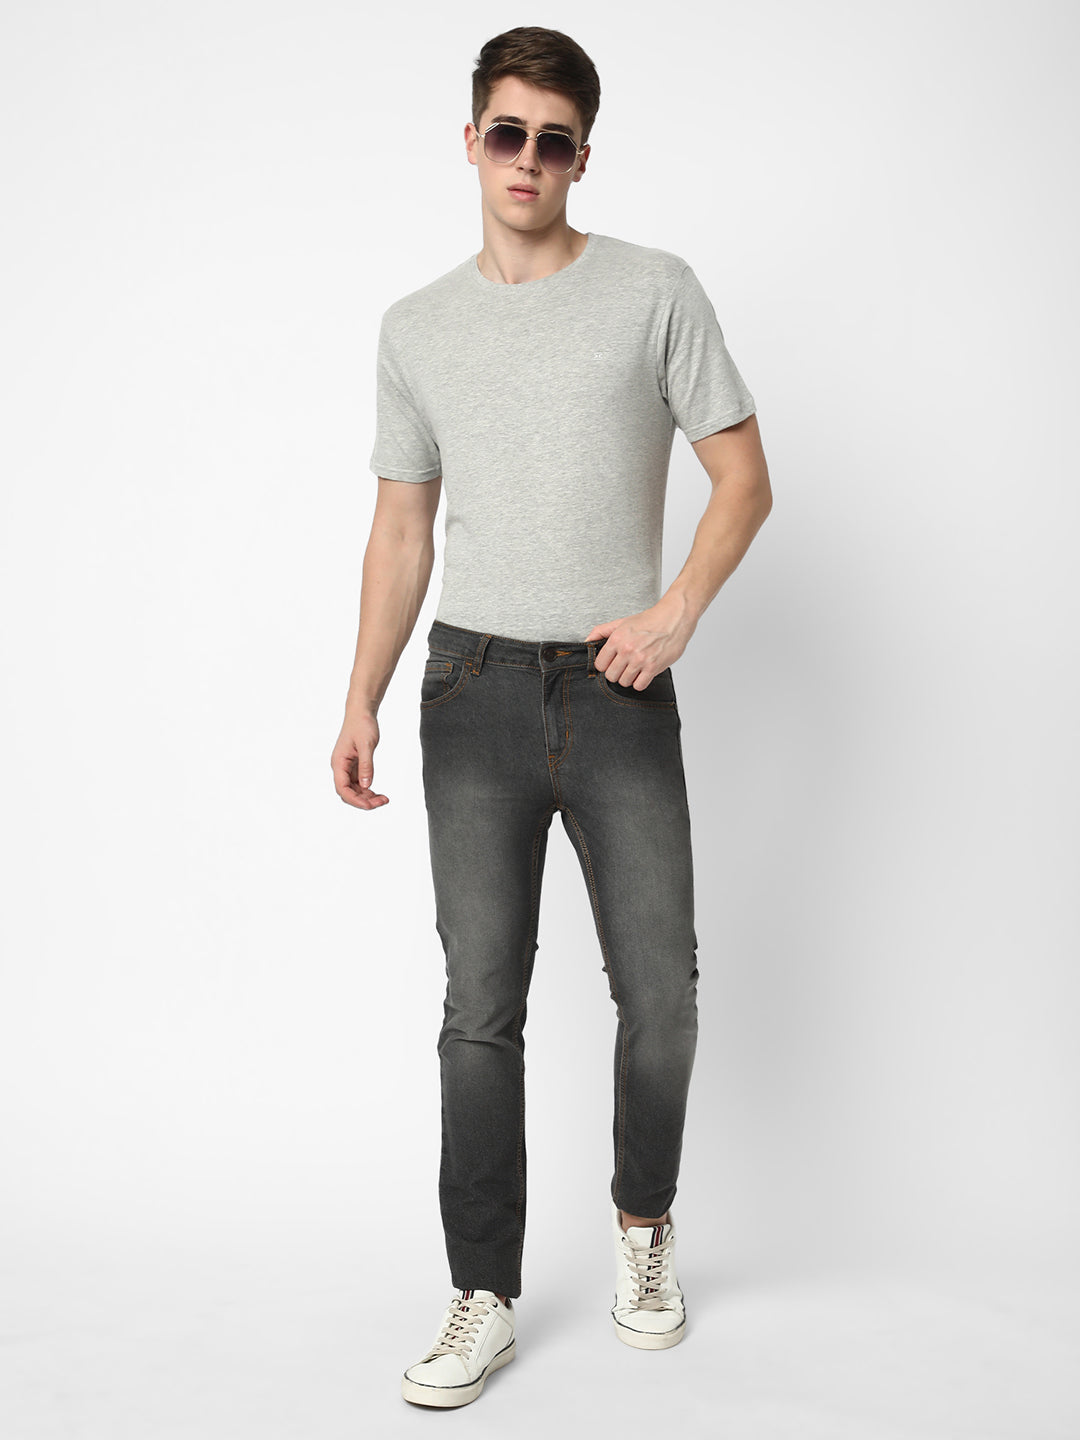 Cotstyle Cotton Fabrics Round Neck Short Length Plain Half Sleeve Casual & Daily Wear Men's T-Shirts -  Pack of 1 - Lt.Grey Melange